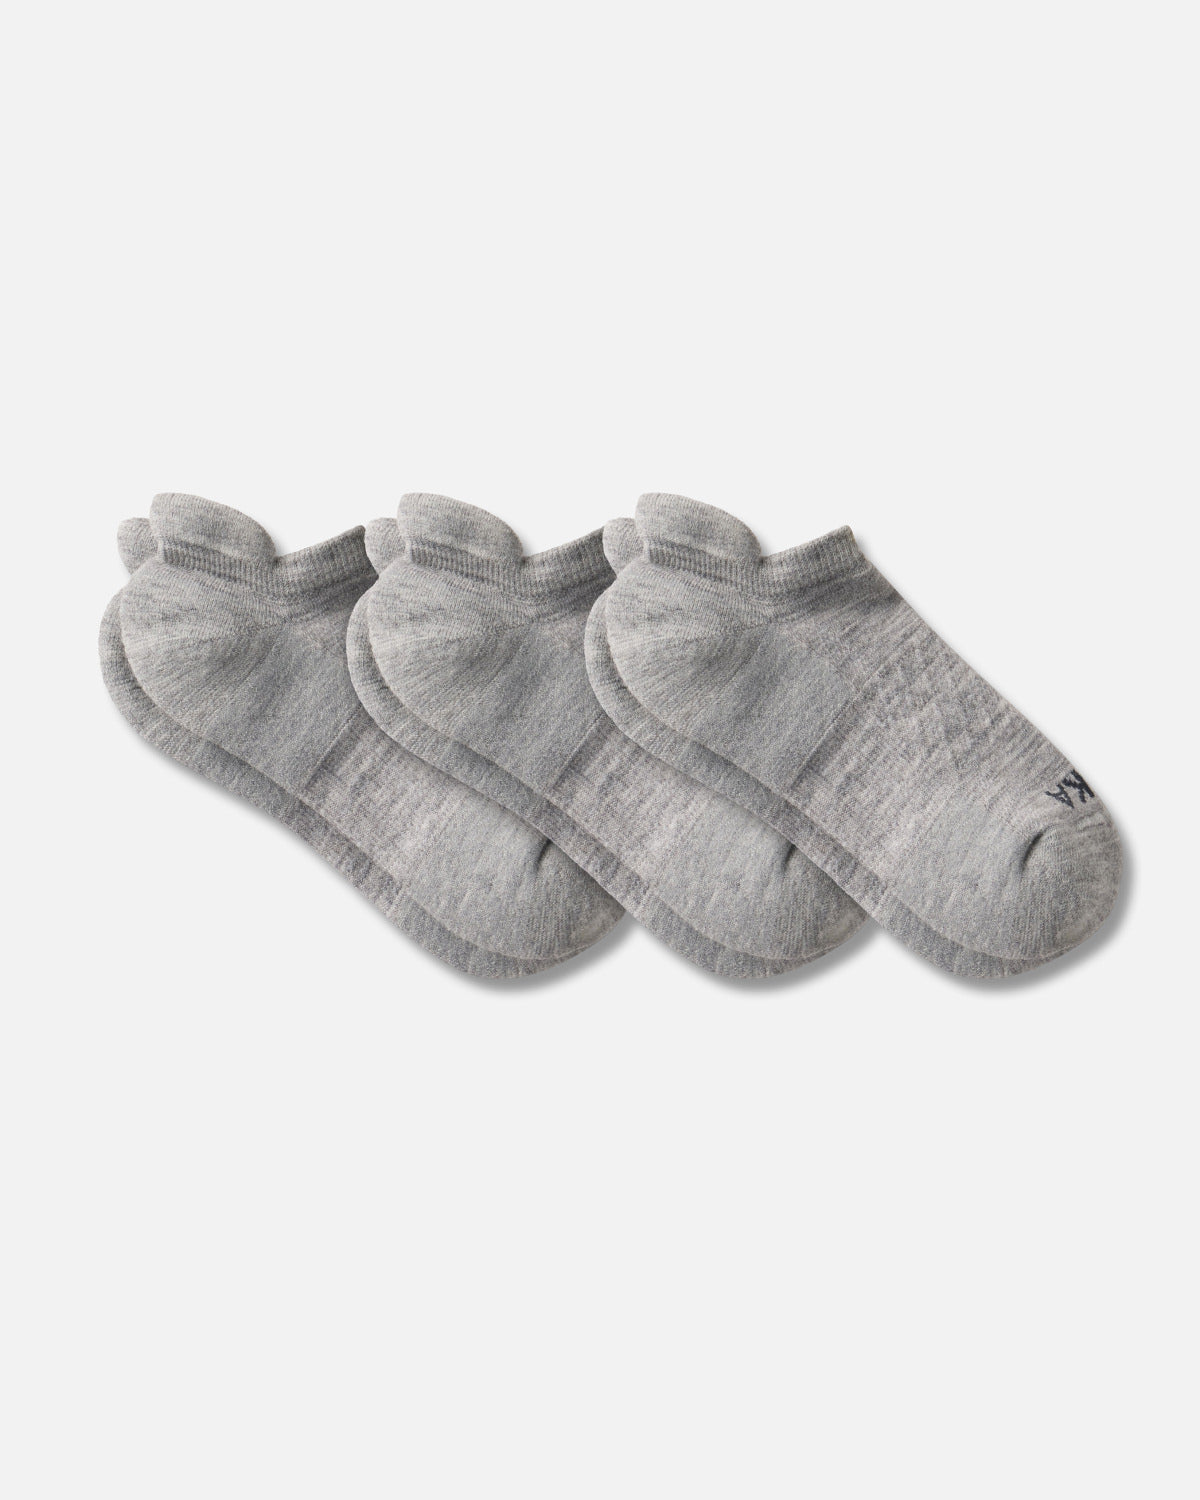 3 pairs of light grey color alpaca wool ankle socks